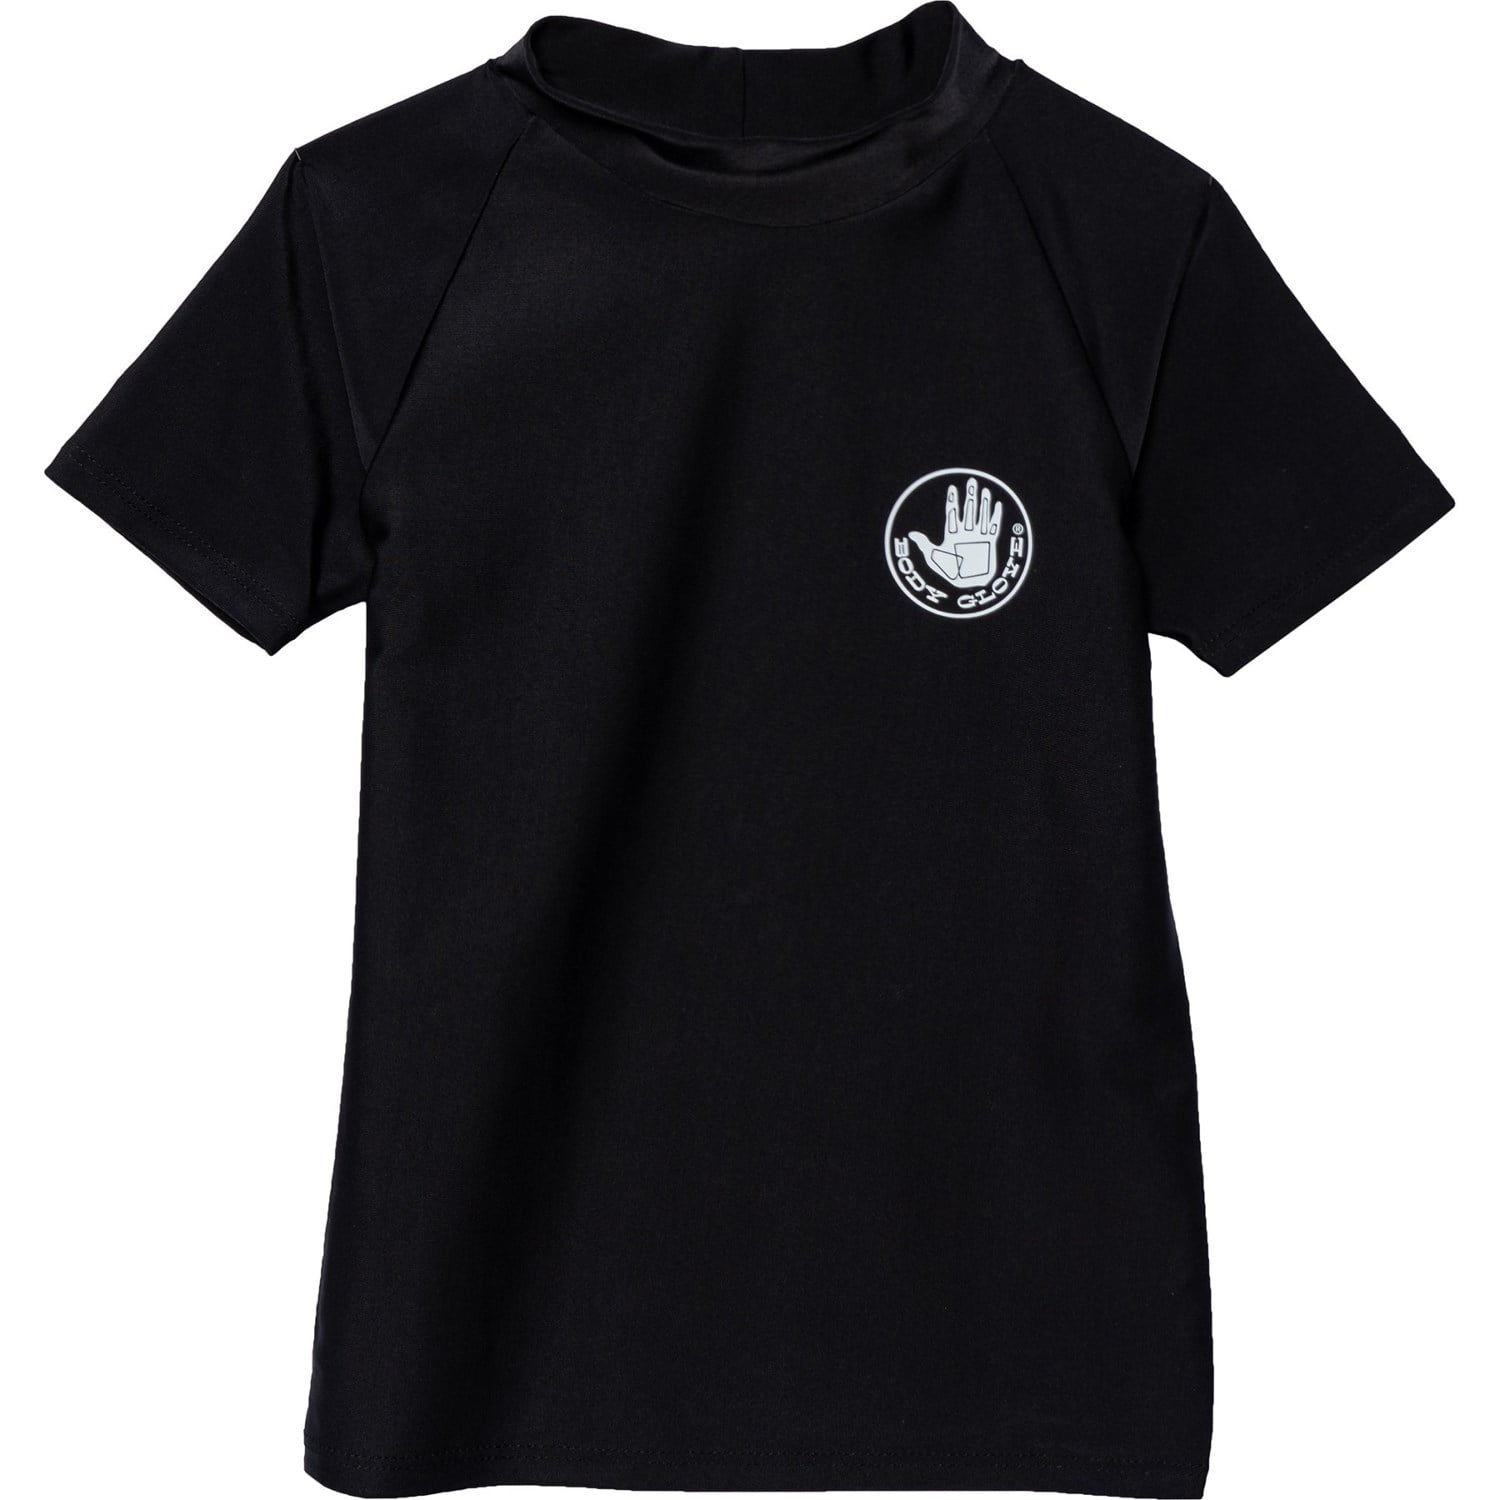 Body Glove Mens UPF 50 High Performance Rash Guard Short Sleeve Shirt Large for sale online